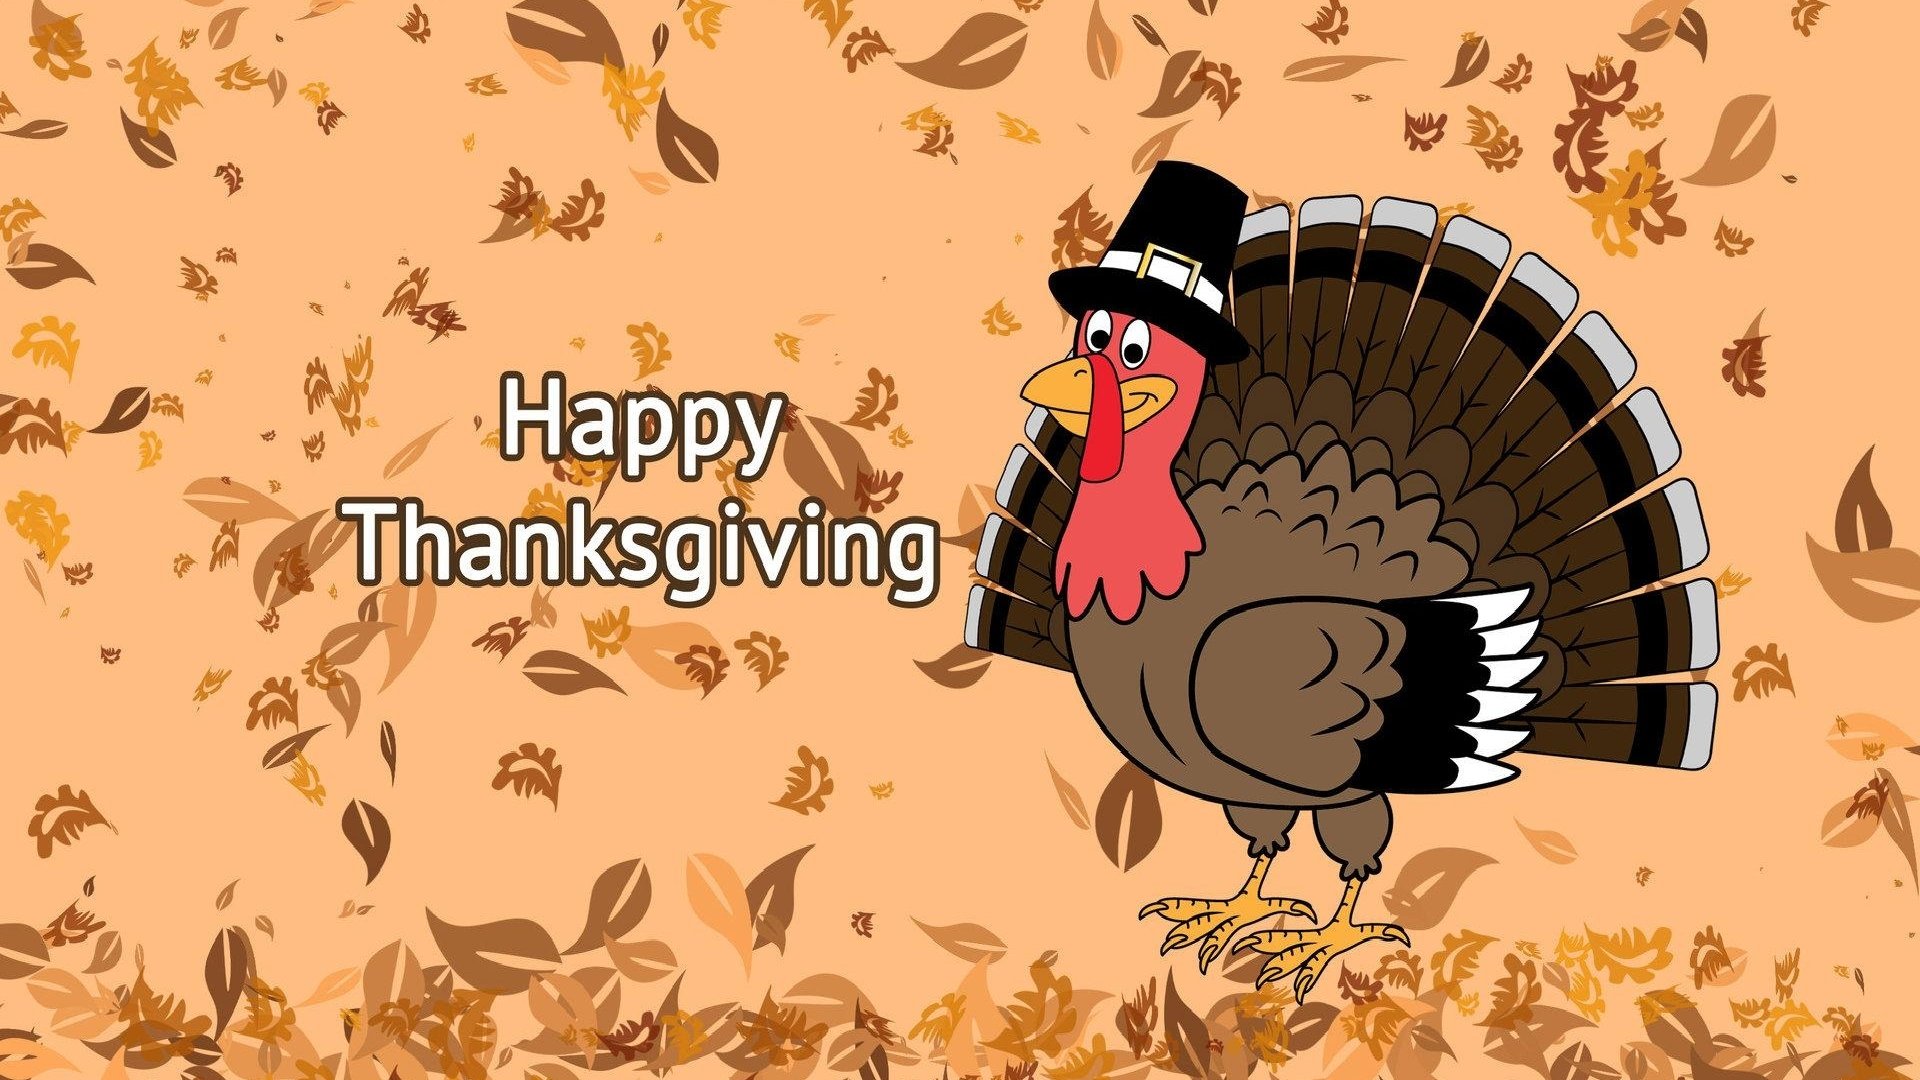 Happy thanksgiving HD wallpaper 1920x1200 1366x768 1440x900 1600x1200